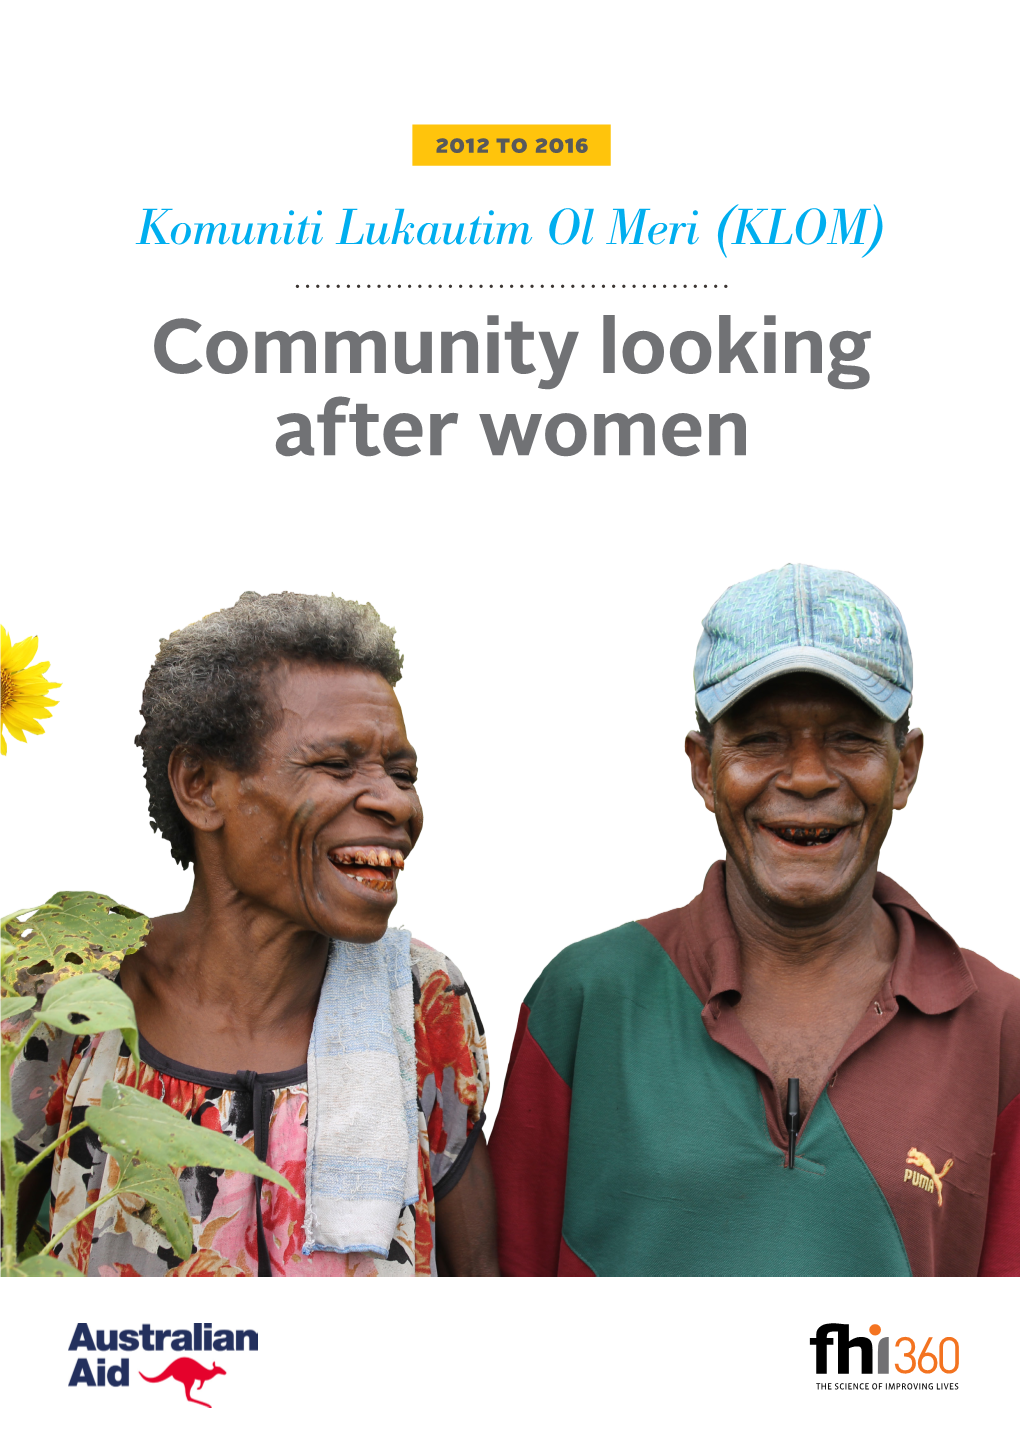 Community Looking After Women 2012 to 2016 Komuniti Lukautim Ol Meri (KLOM) Community Looking After Women